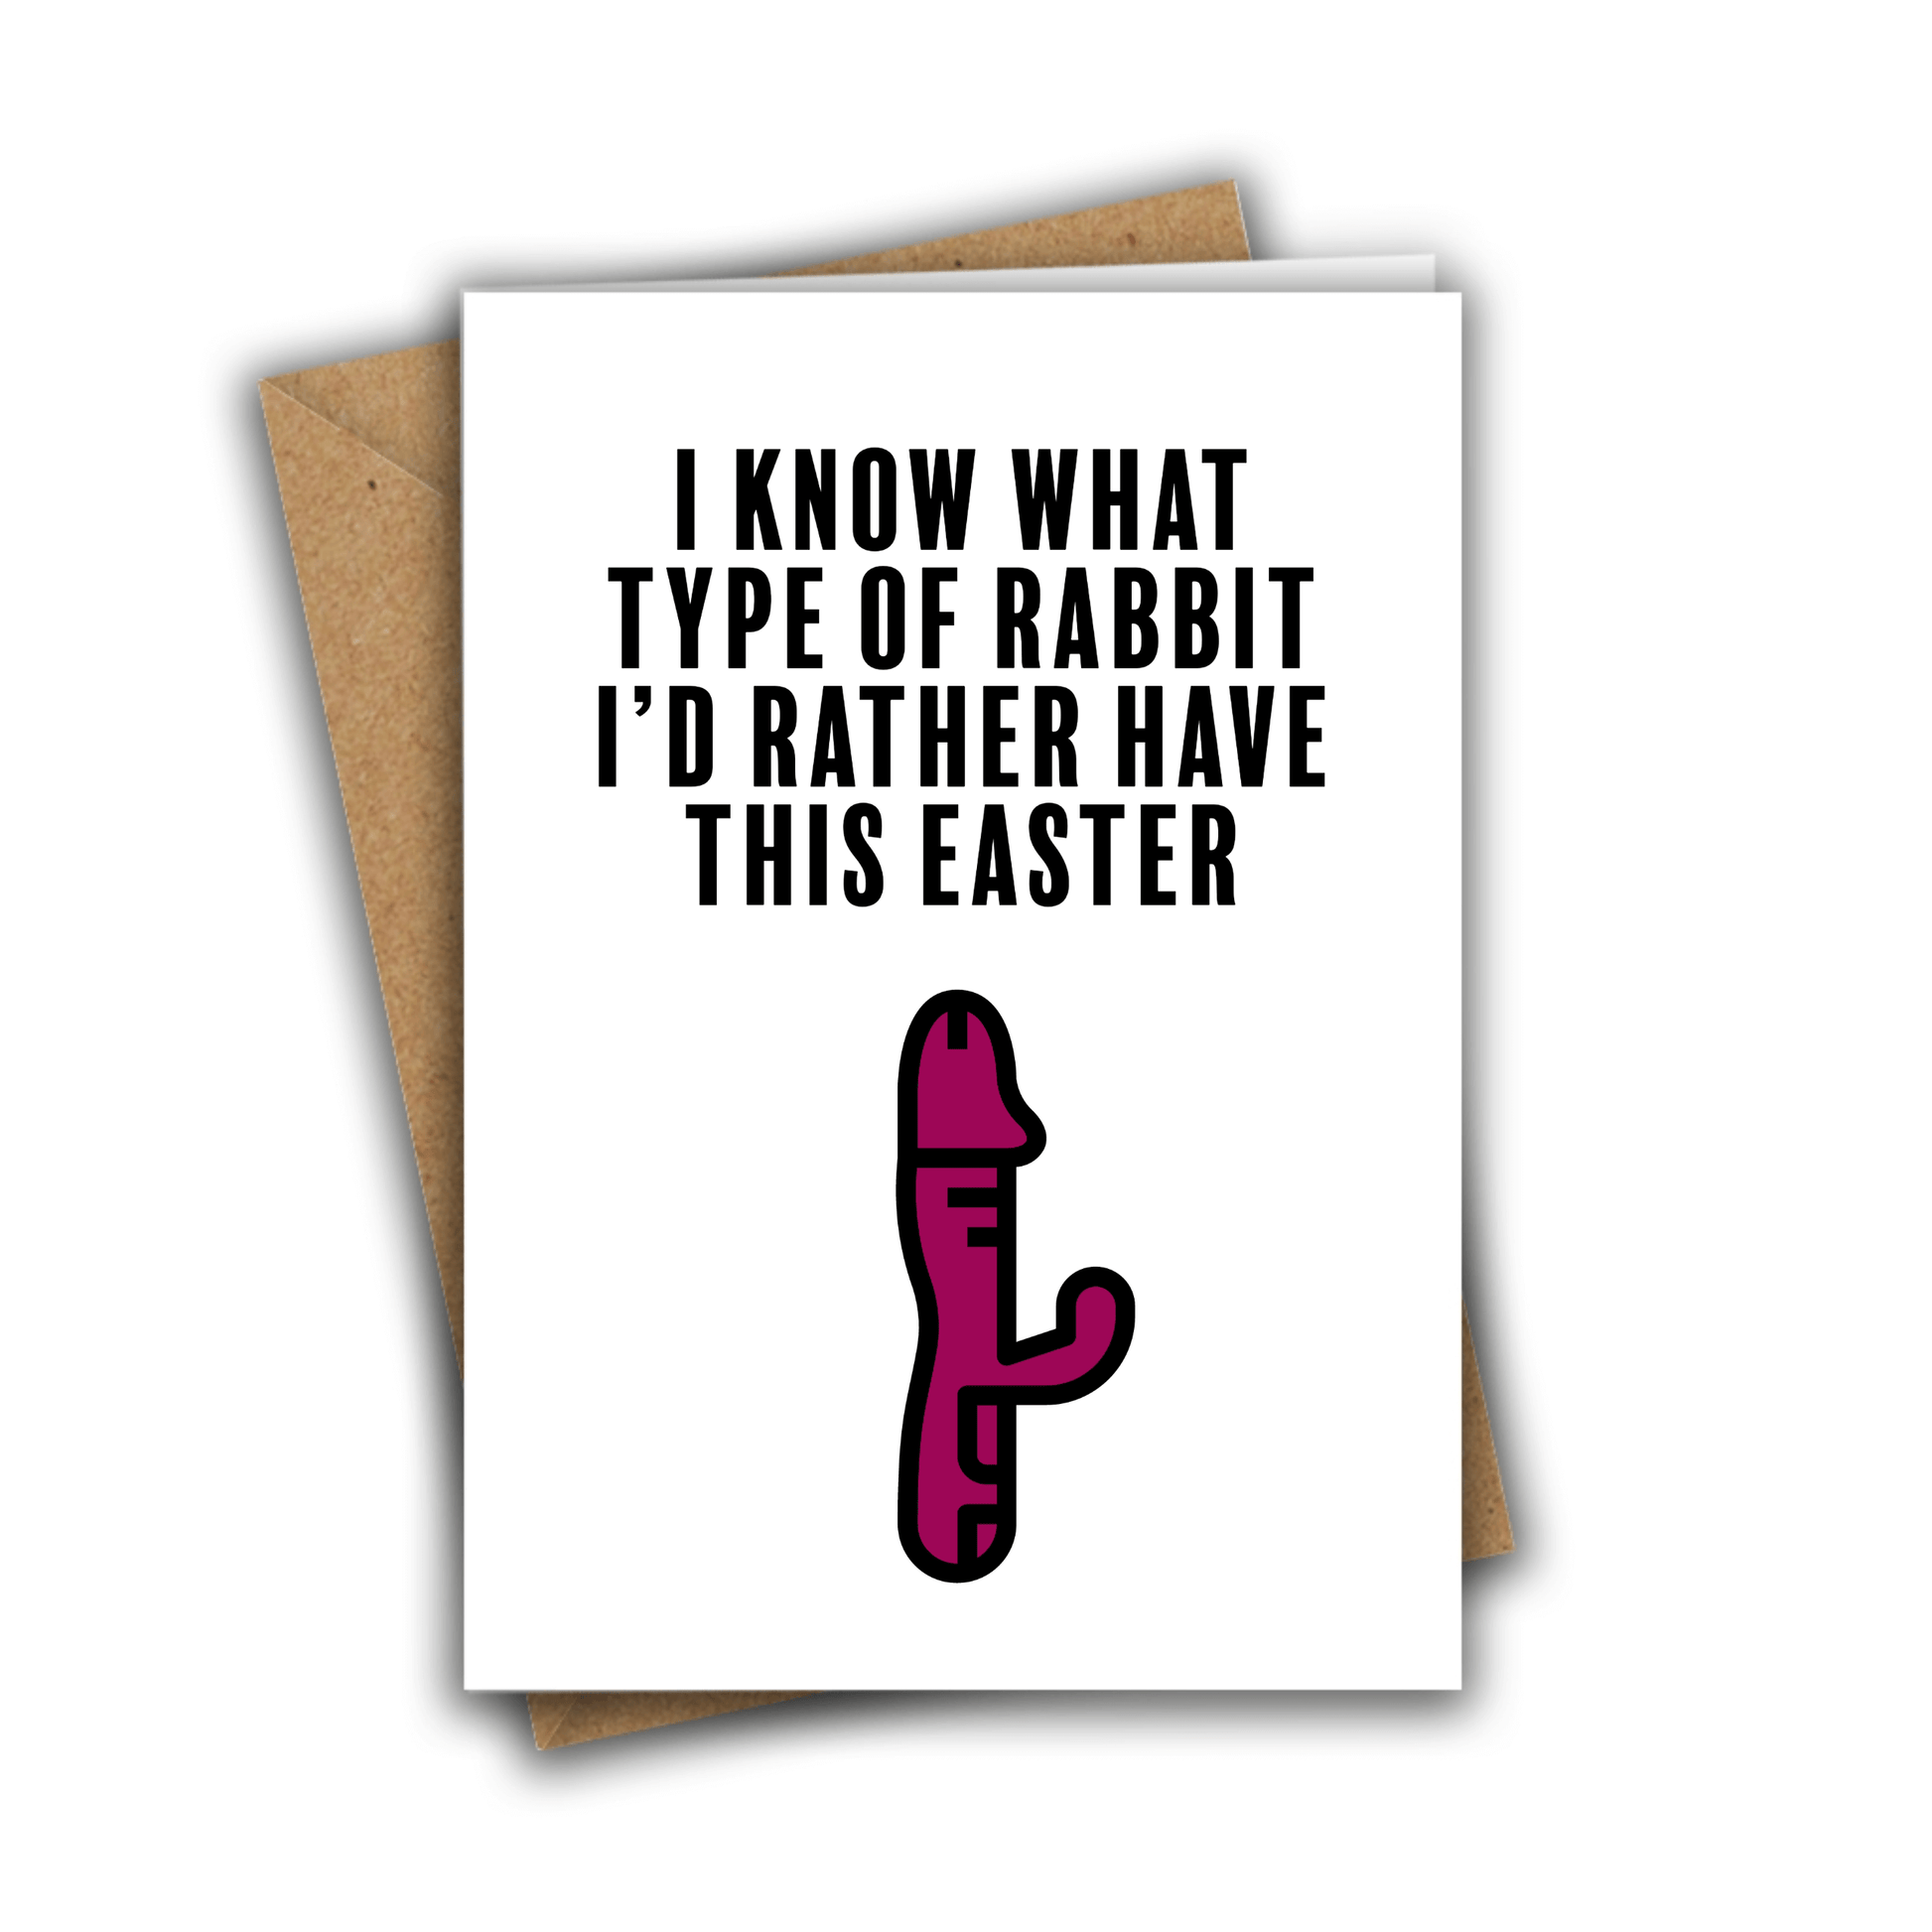 Little Kraken's Type of Rabbit I'd Rather Have, Easter Cards for £3.50 each